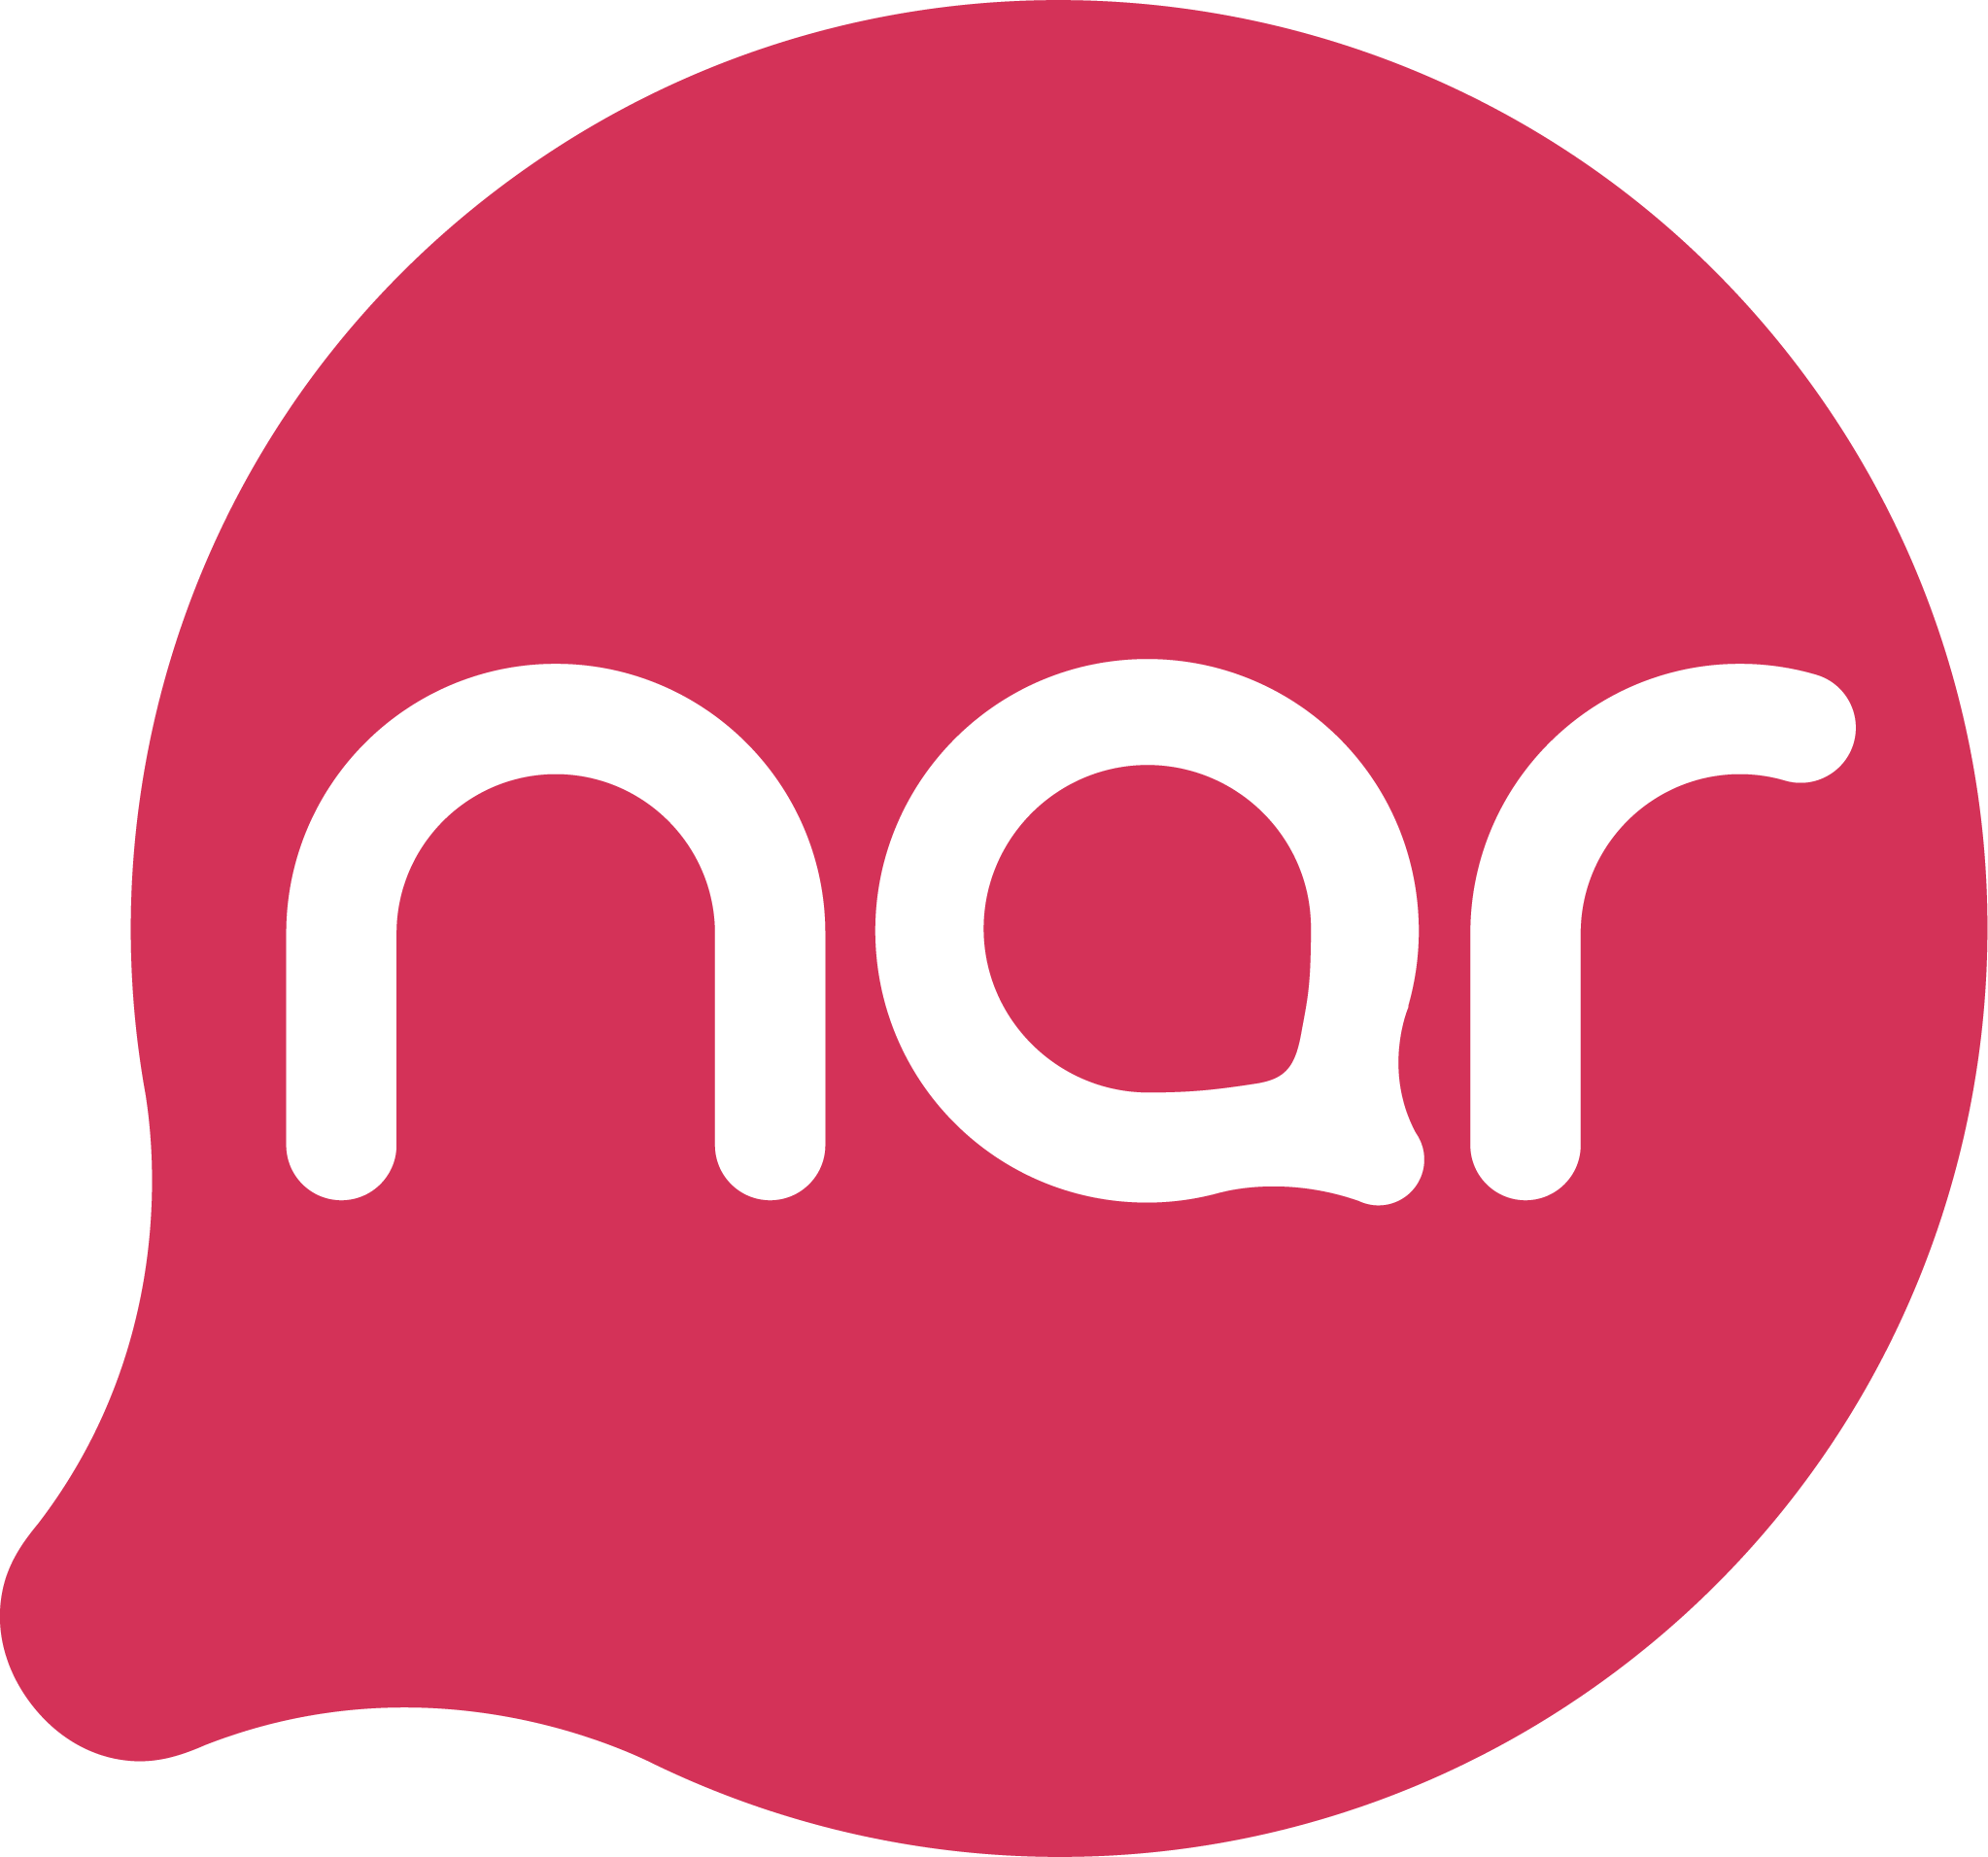 Абоненты "Nar" предпочитают цифровые каналы обслуживания